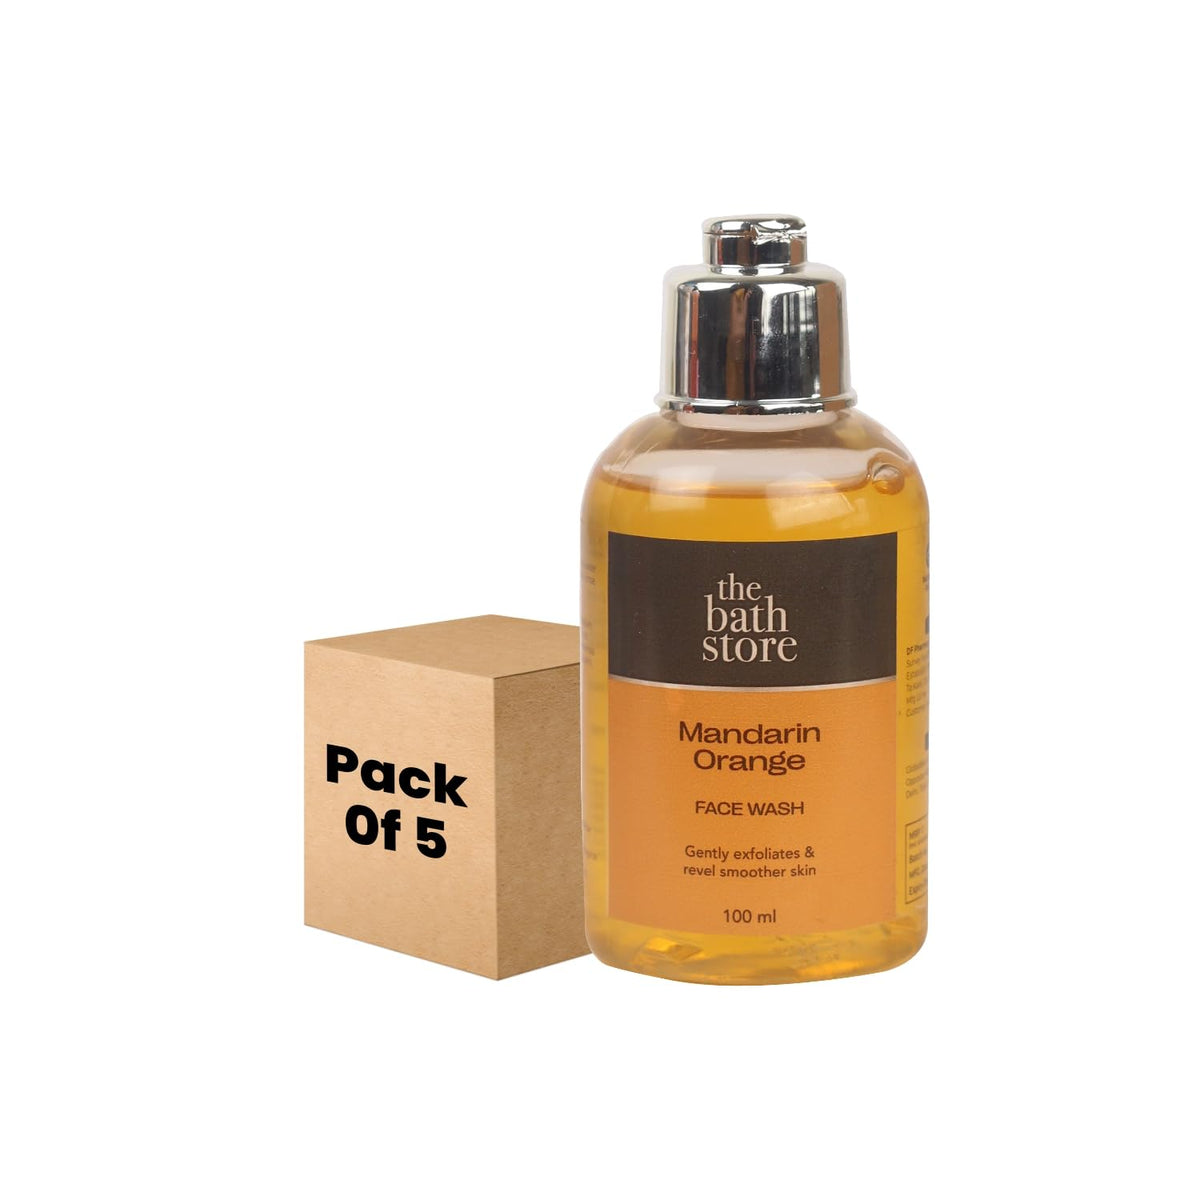 The Bath Store Mandarin Orange Face Wash - Gentle Exfoliation | Deep Cleansing - 100ml (Pack of 5)